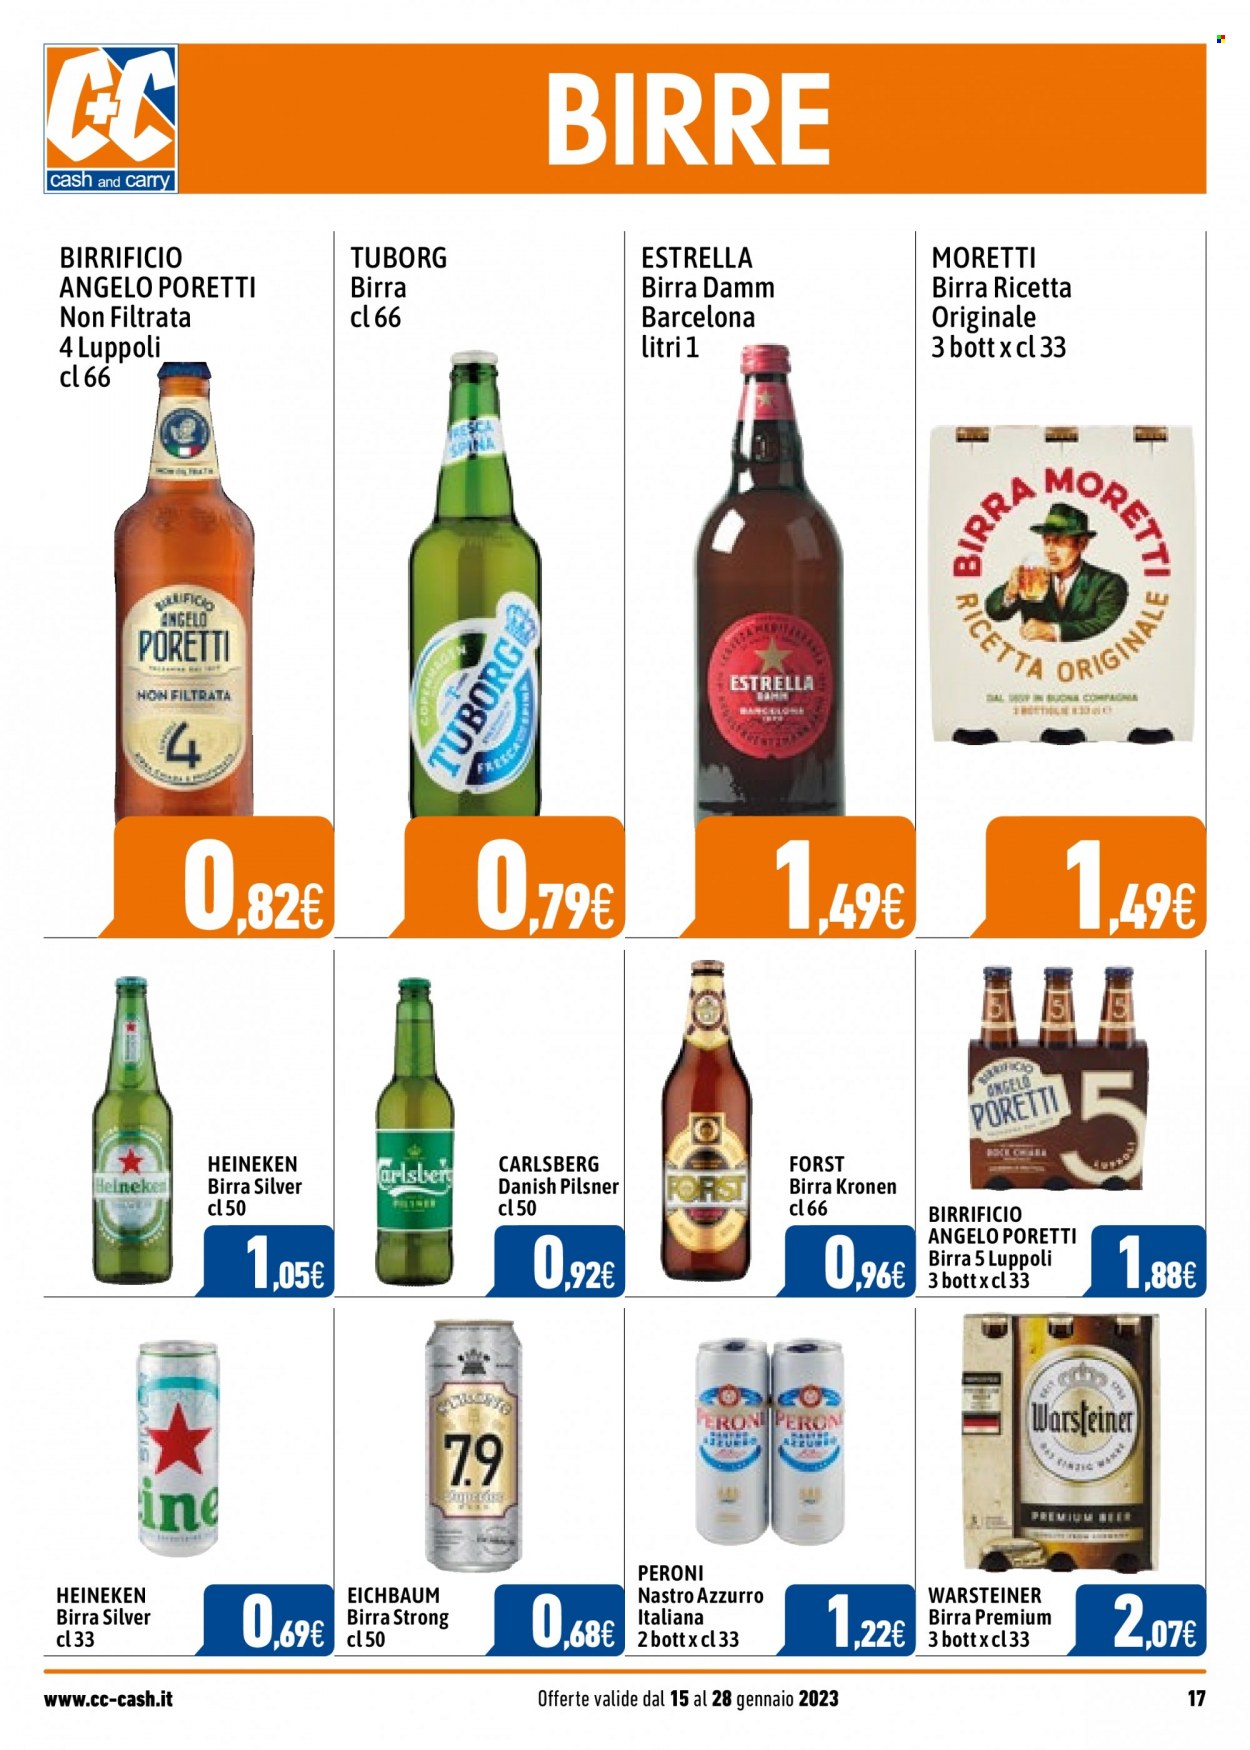 thumbnail - Volantino C+C Cash & Carry - 15/1/2023 - 28/1/2023 - Prodotti in offerta - Heineken, Birra Moretti, Peroni, Angelo Poretti, birra, Tuborg, Warsteiner, birra tipo pilsner, Nastro Azzurro. Pagina 17.